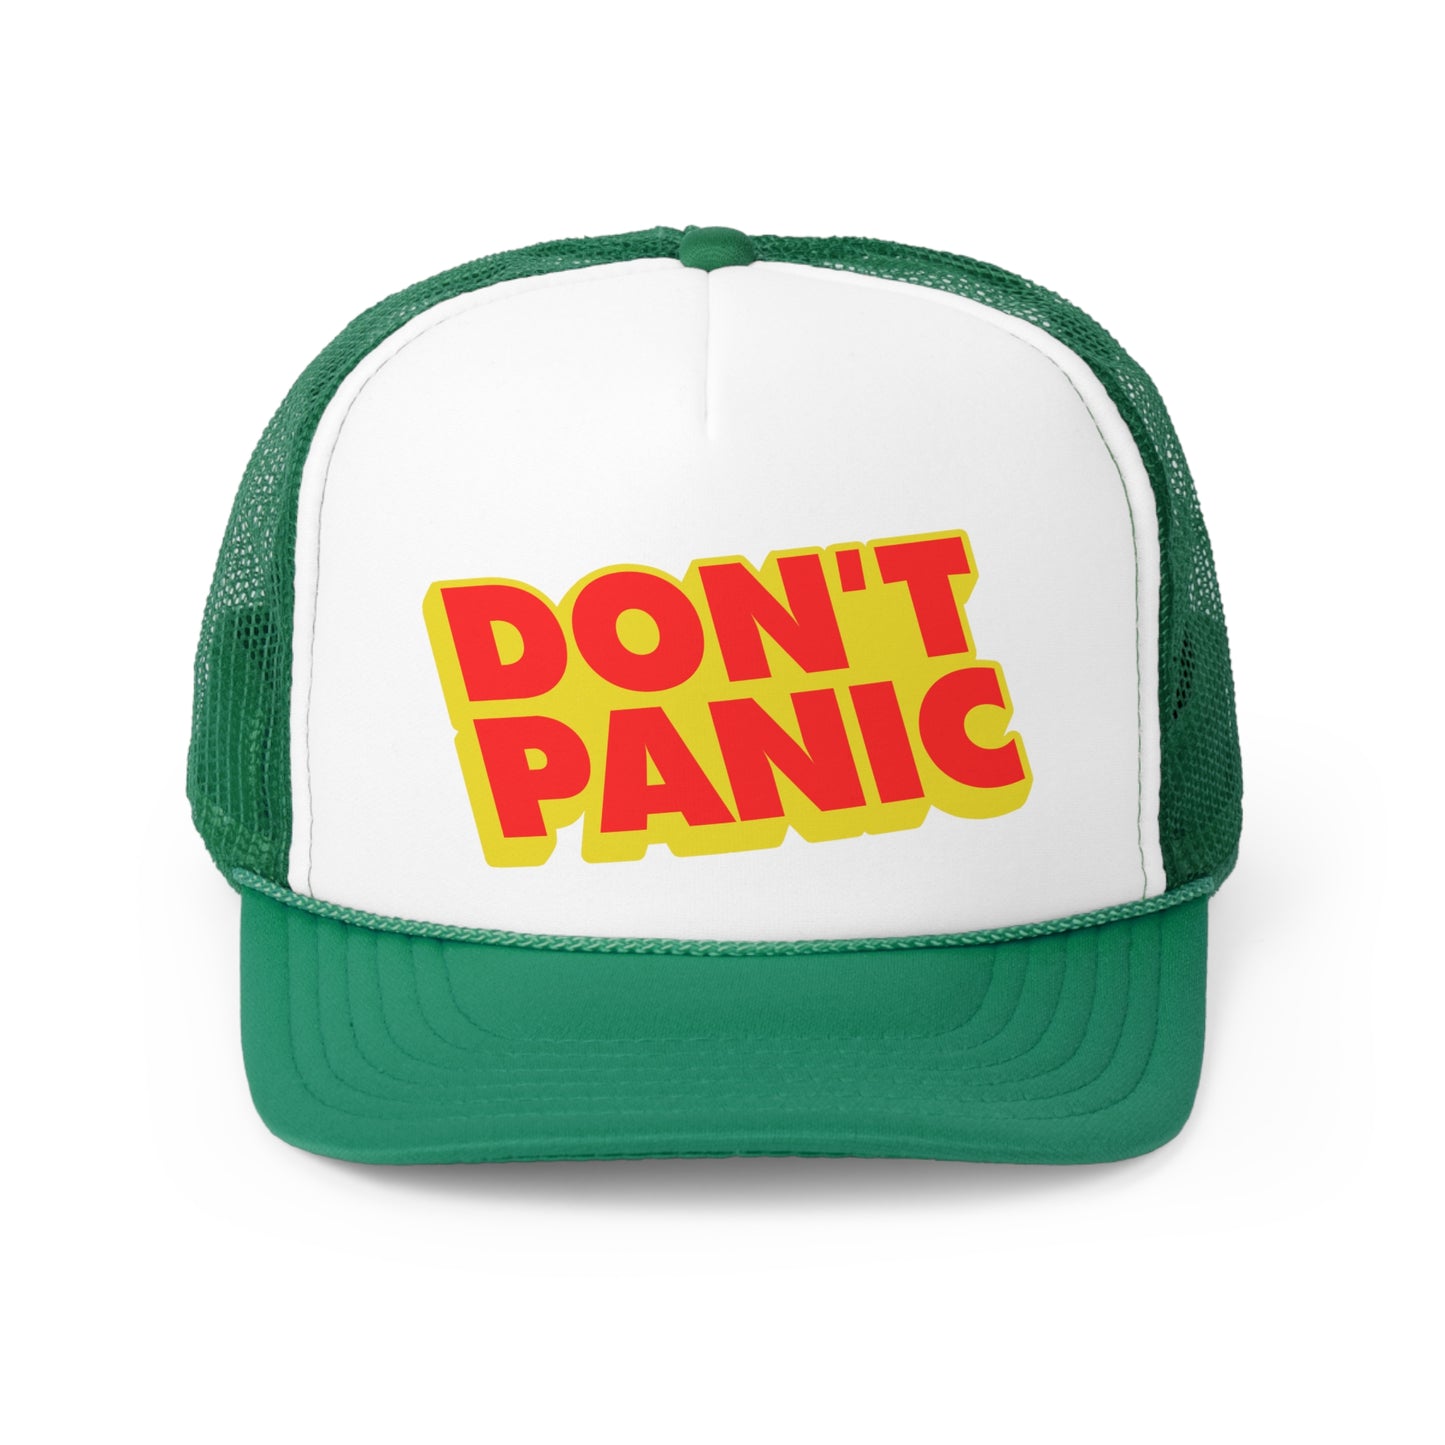 DON'T PANIC trucker hat